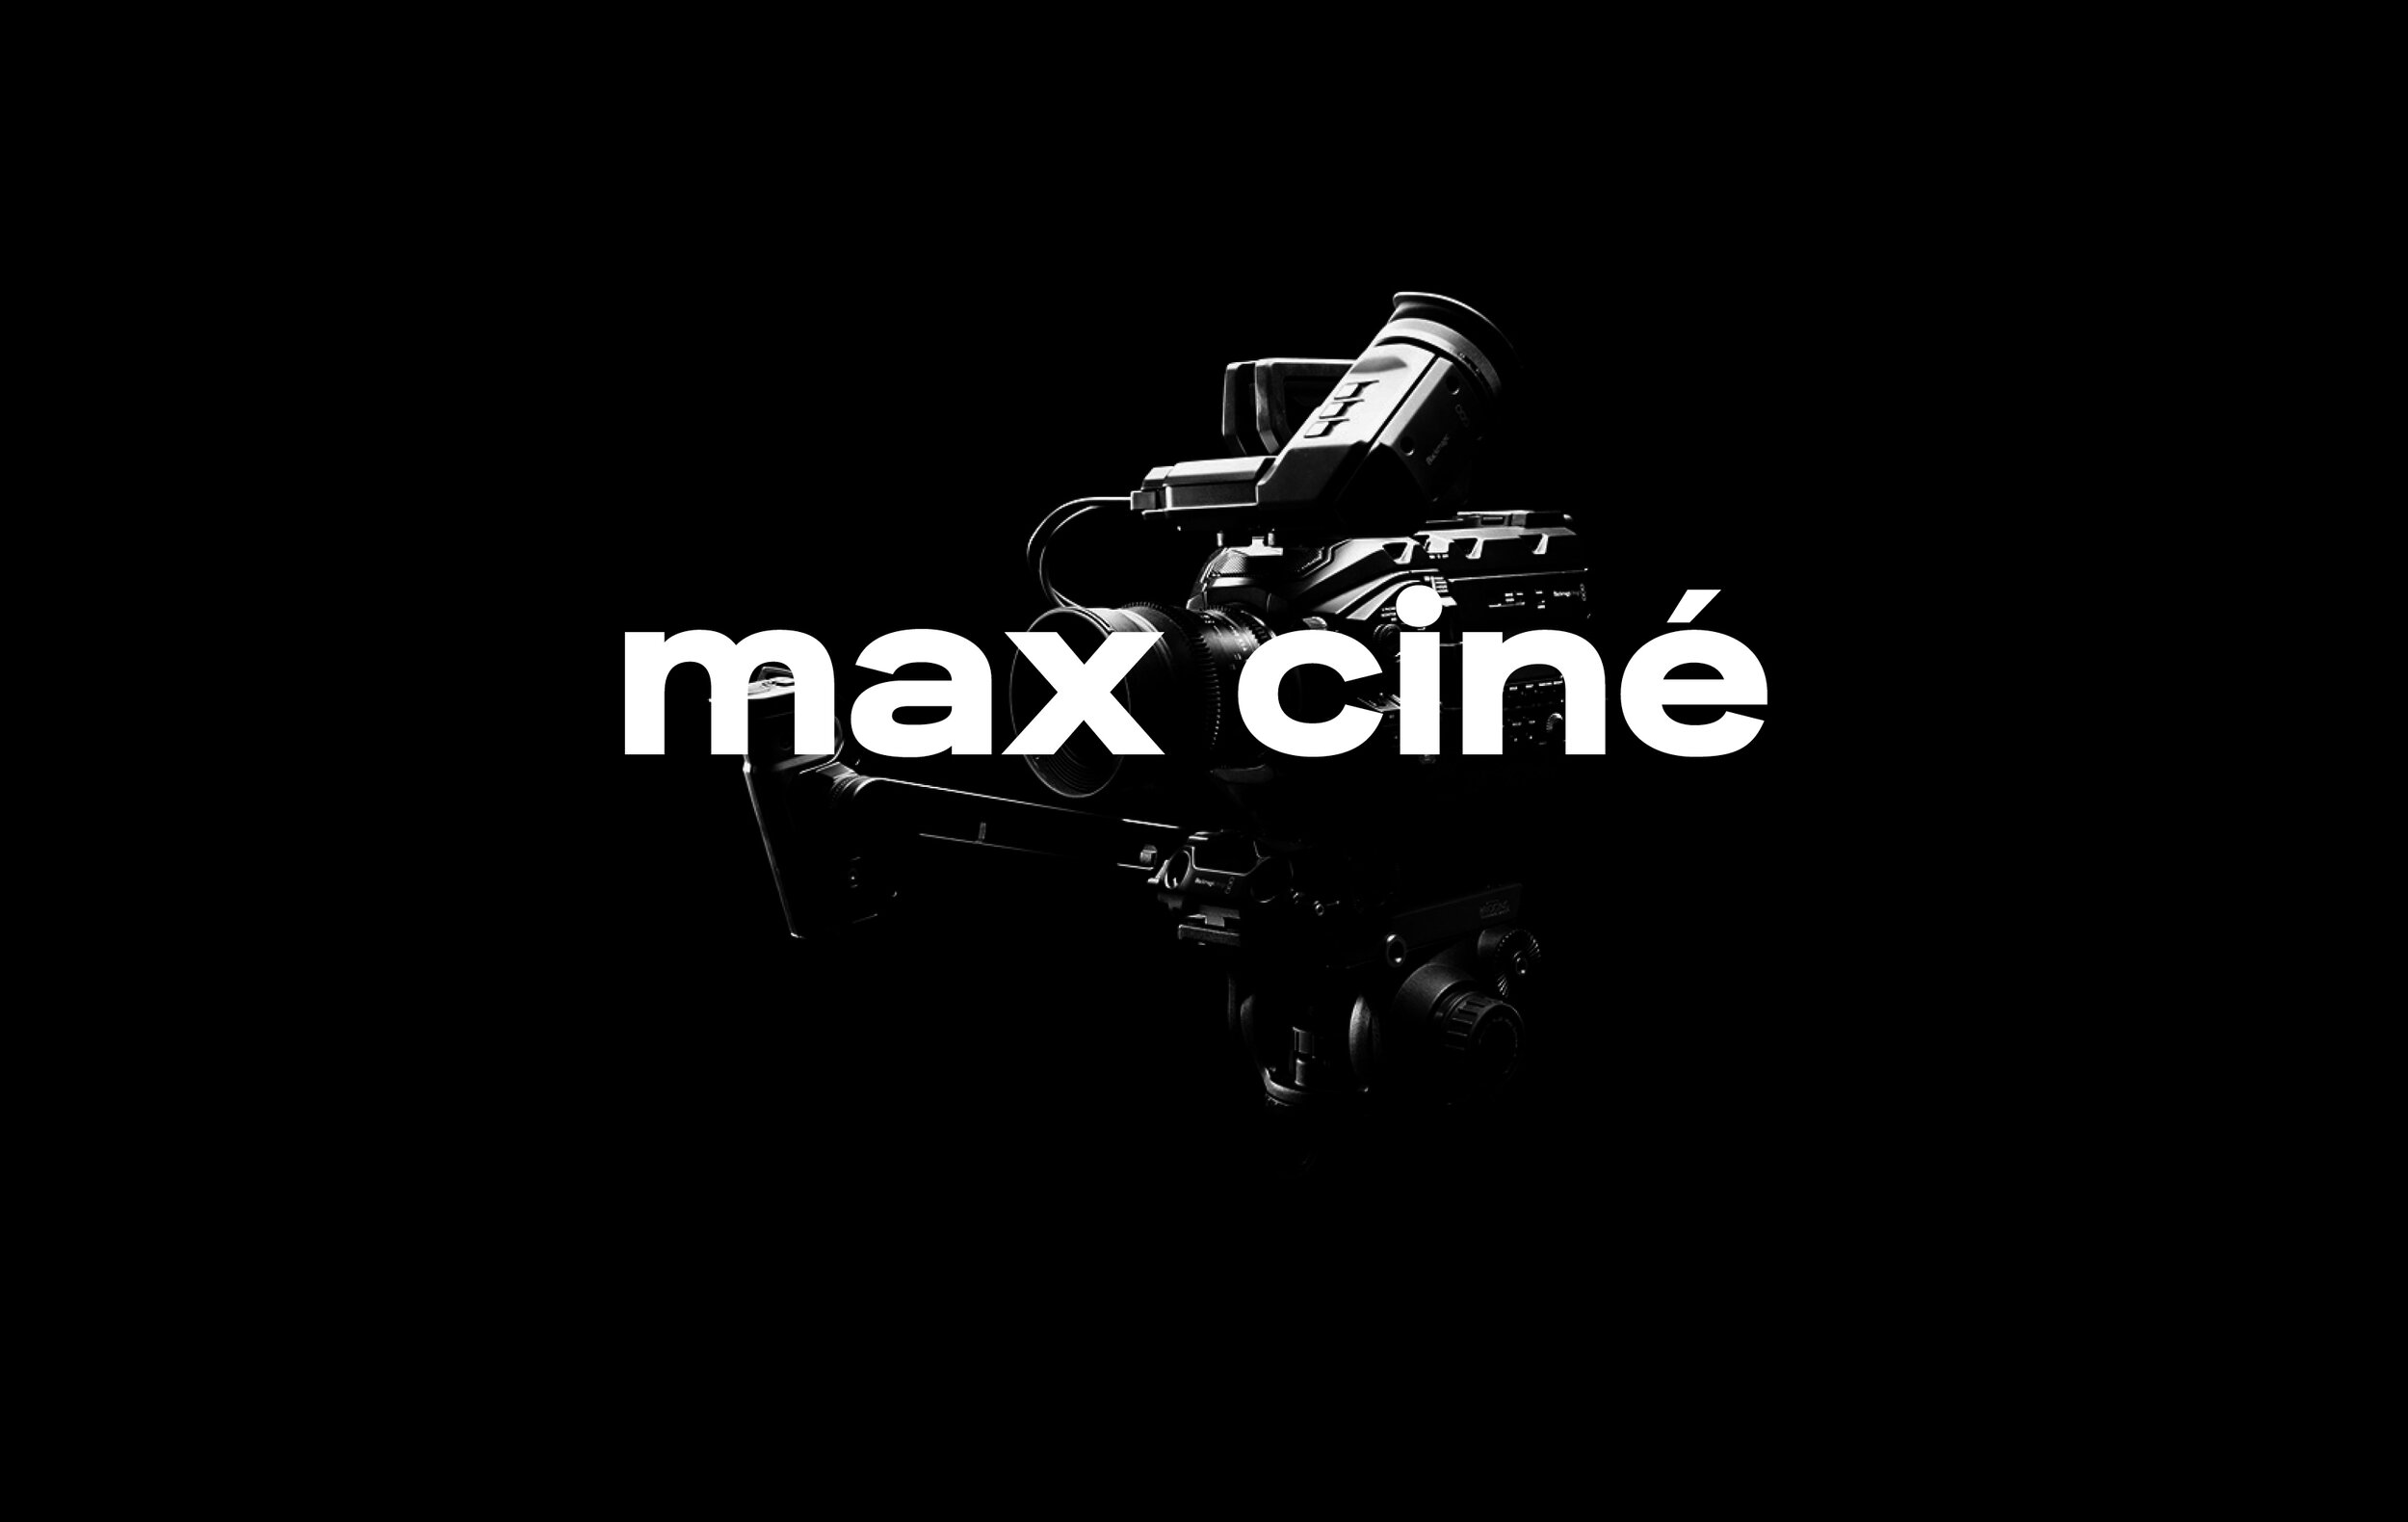 Max-Cine-1.jpg